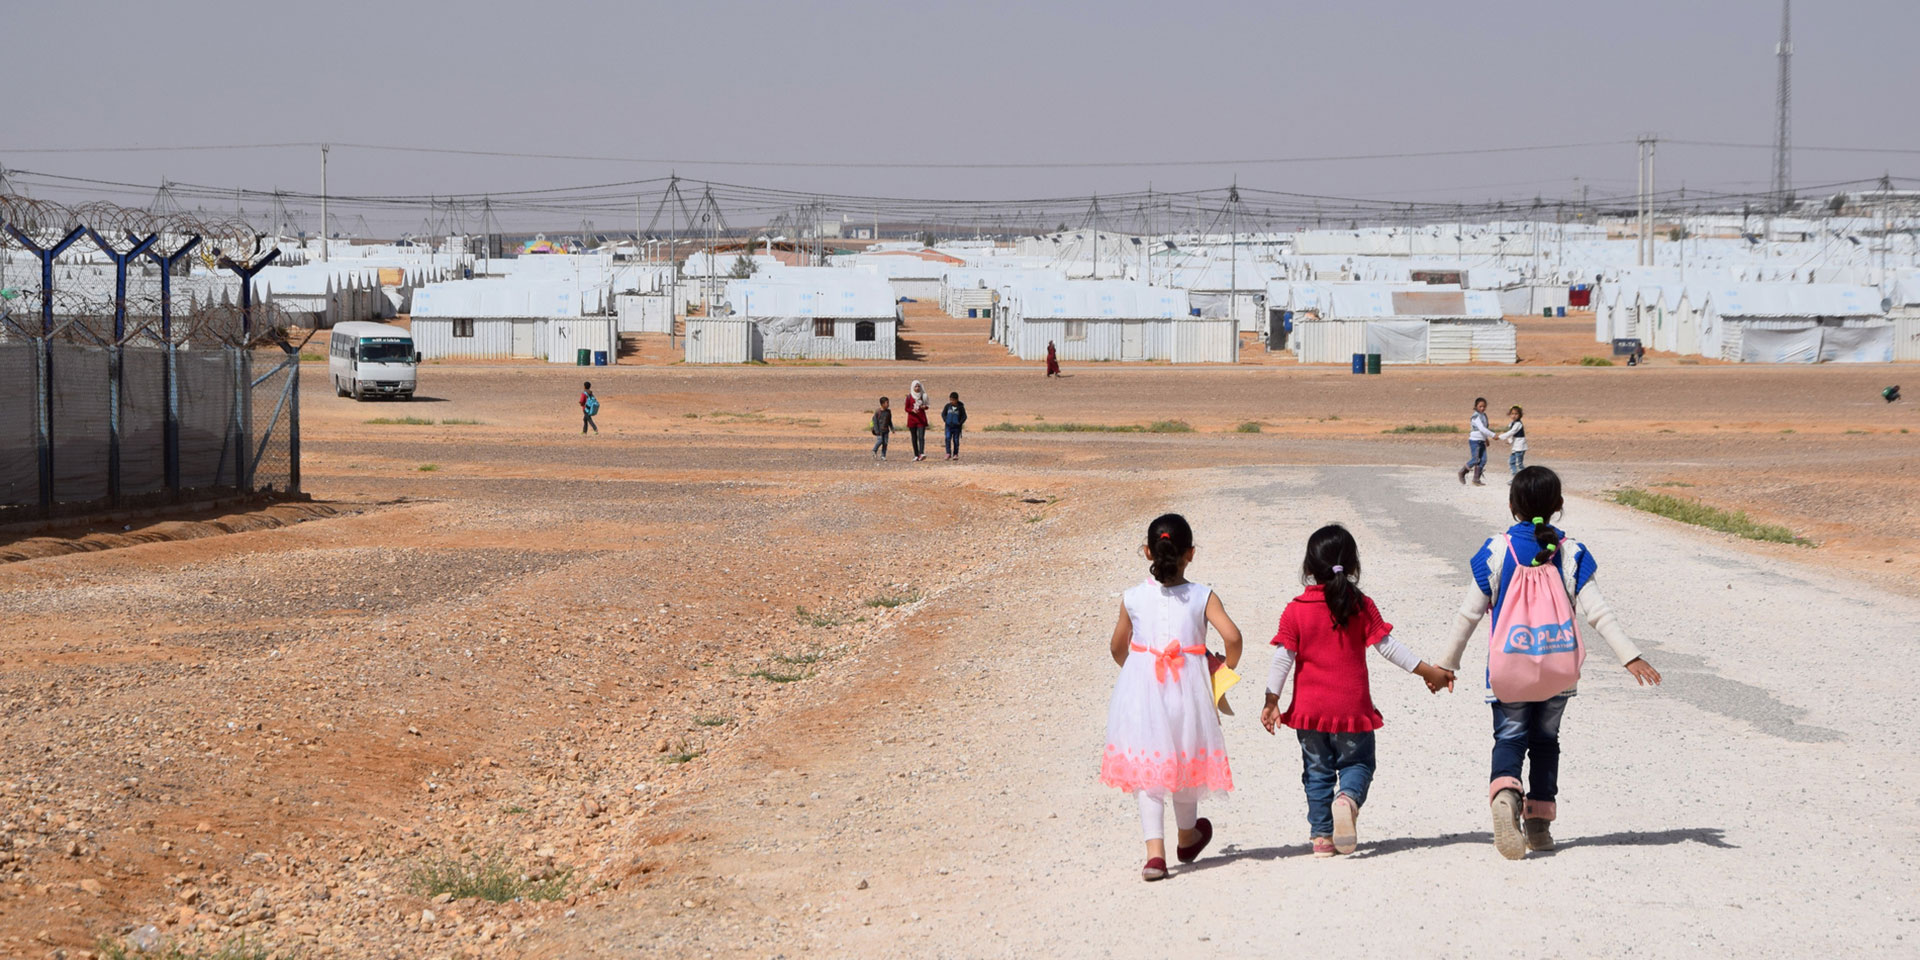  Three girls walk along a gravel path at the Azraq refugee camp in the Jordanian desert.